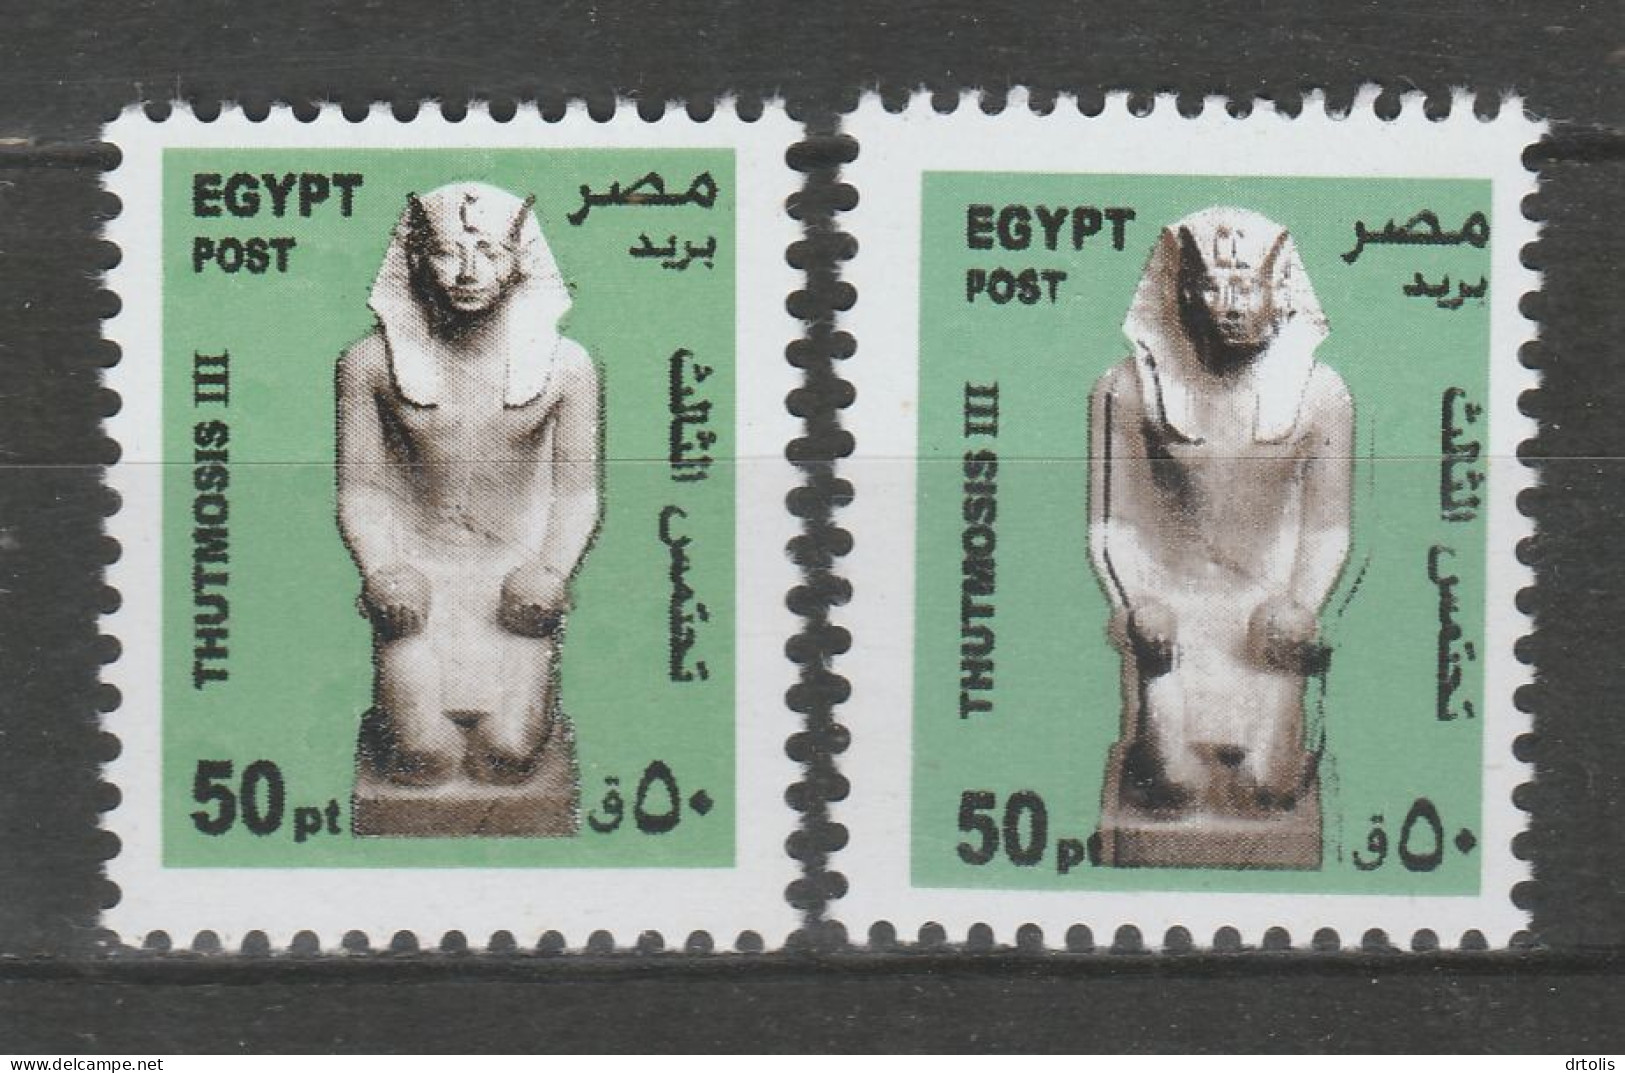 EGYPT / 2013 / A RARE PRINTING ERROR / THUTMOSE III / MNH / VF - Ongebruikt